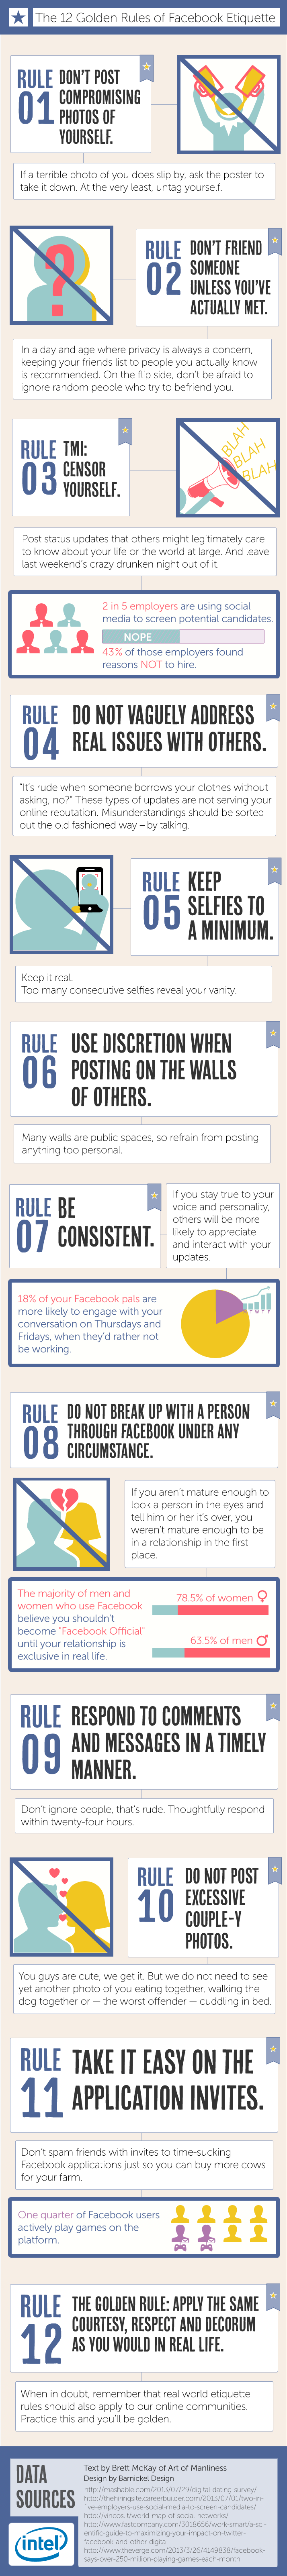 Social Media Infographic: 12 Golden Rules of Facebook Etiquette